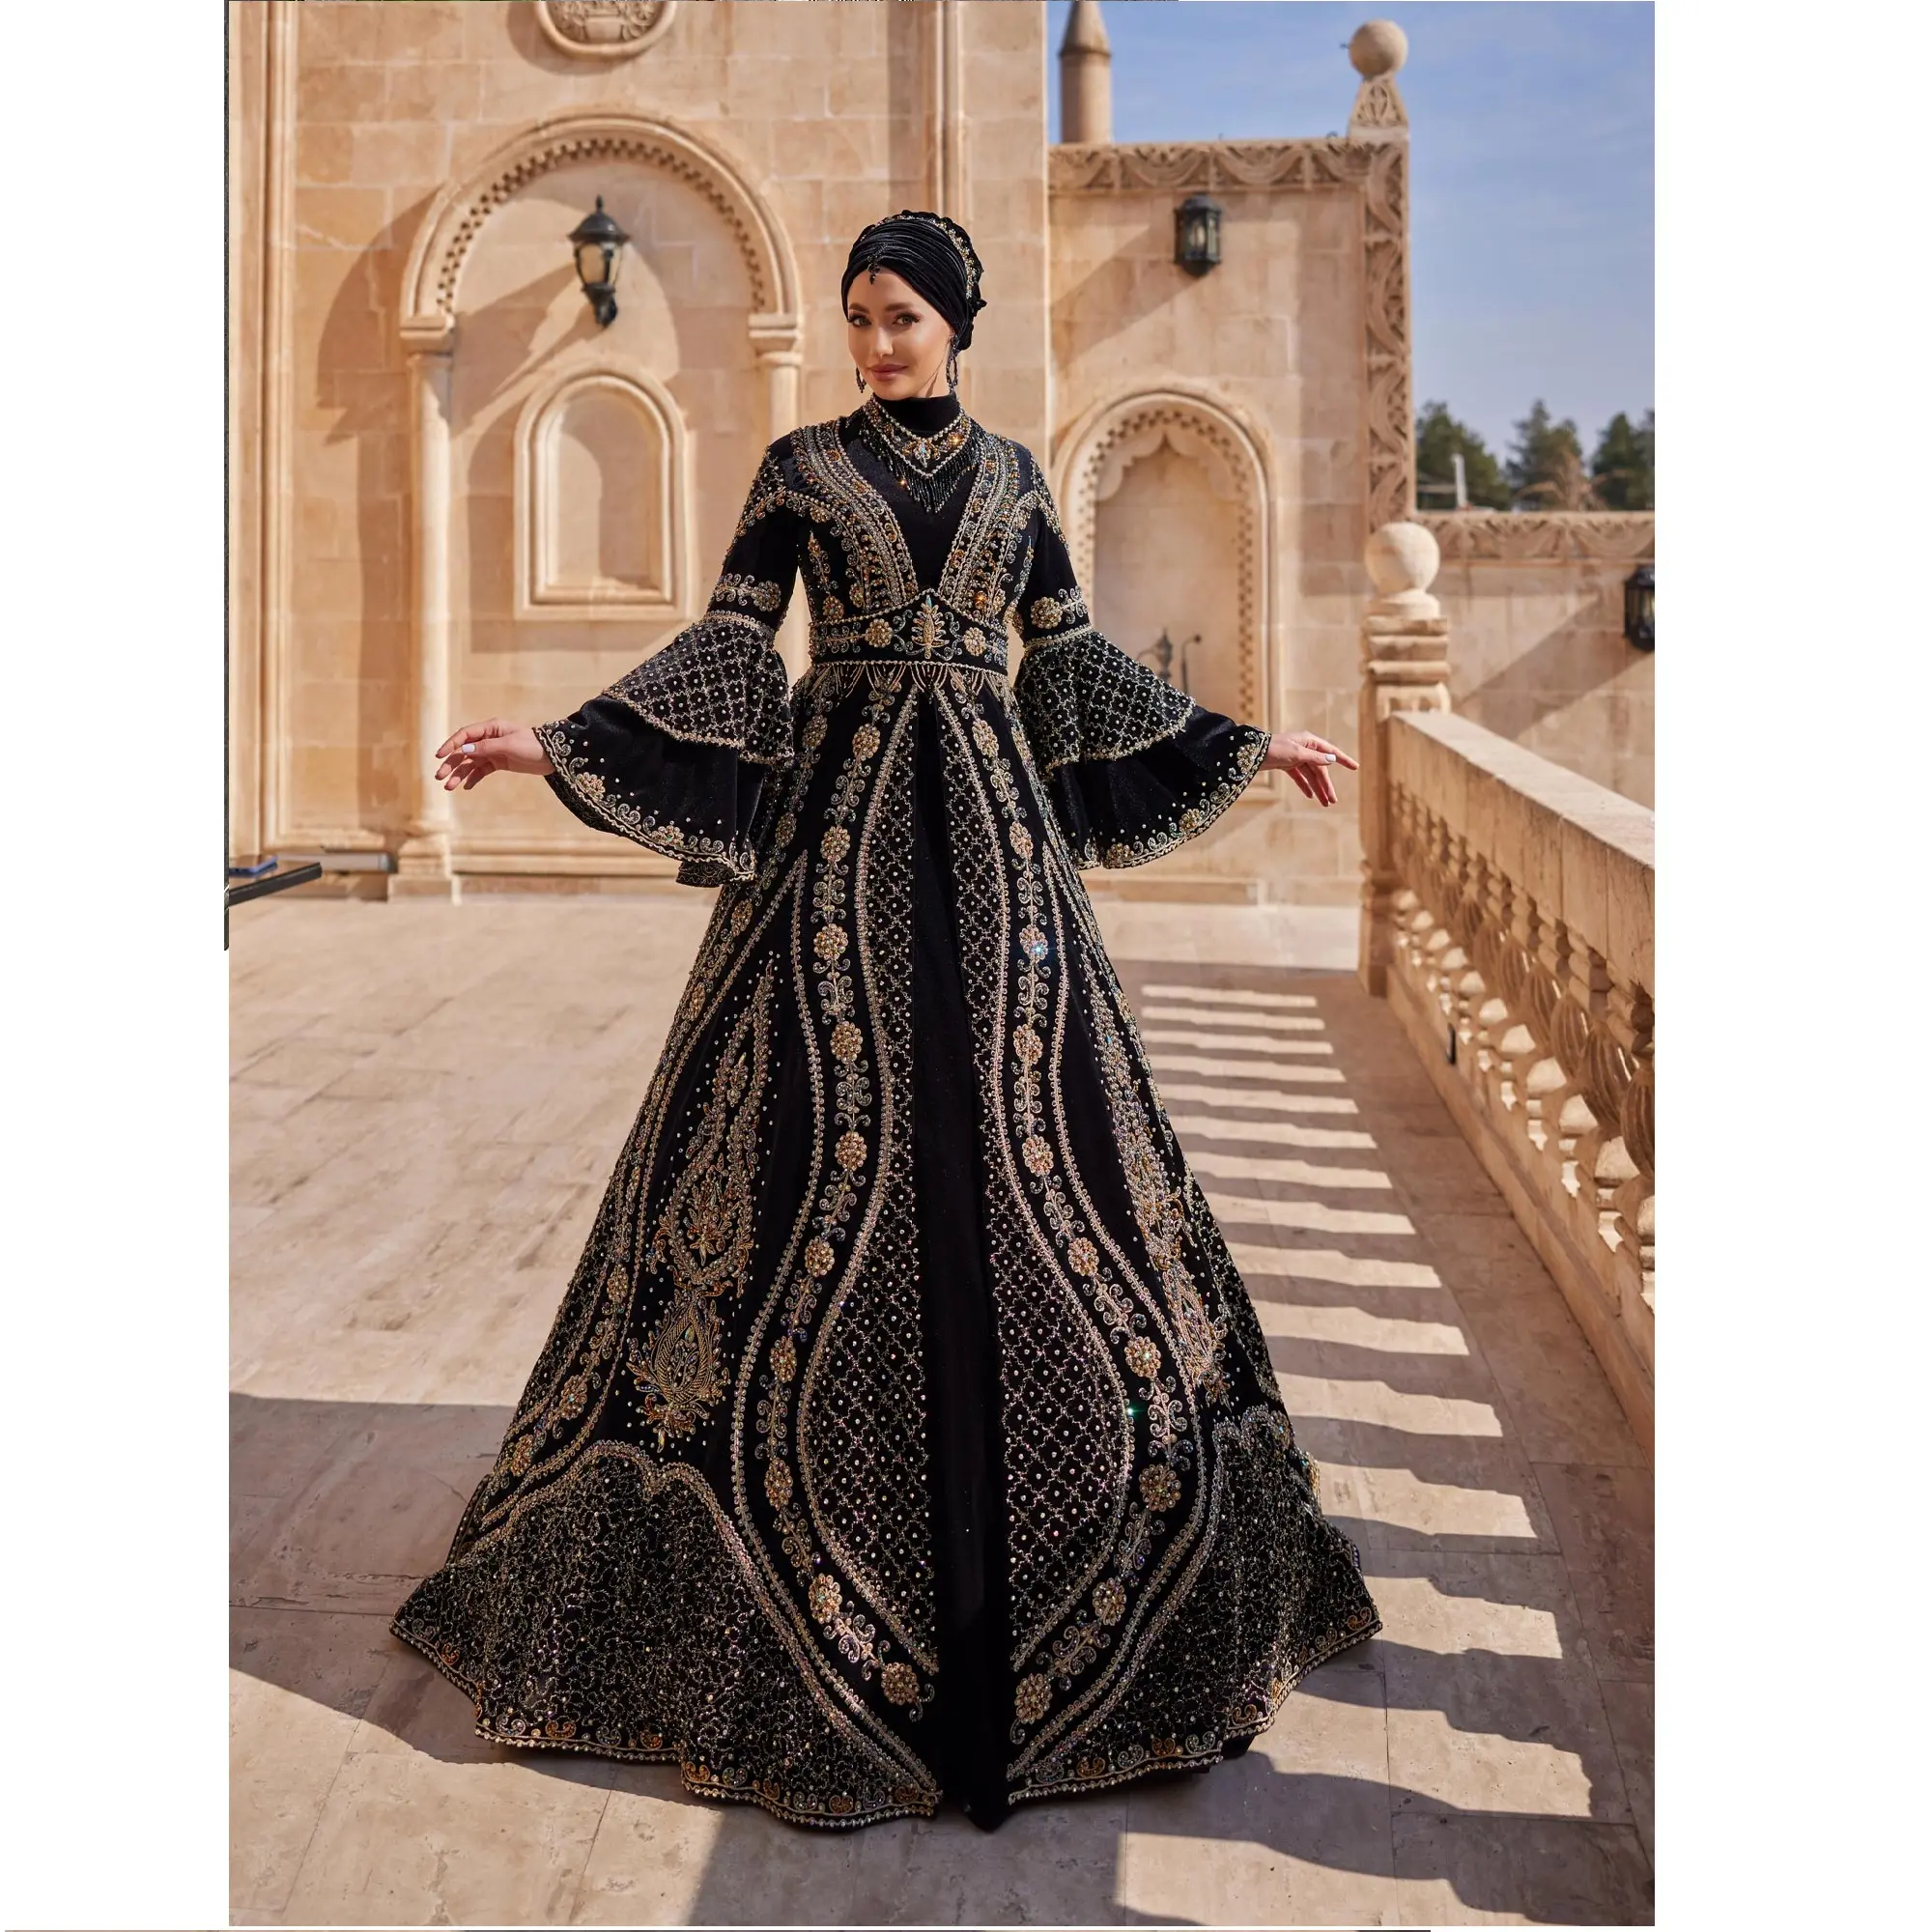 Black Muslim Wedding Arabic Gown with Hijab New Muslim Women Arabic Kaftan Islamic Maxi Dress Long Sleeve Arab Jilbab Abaya who